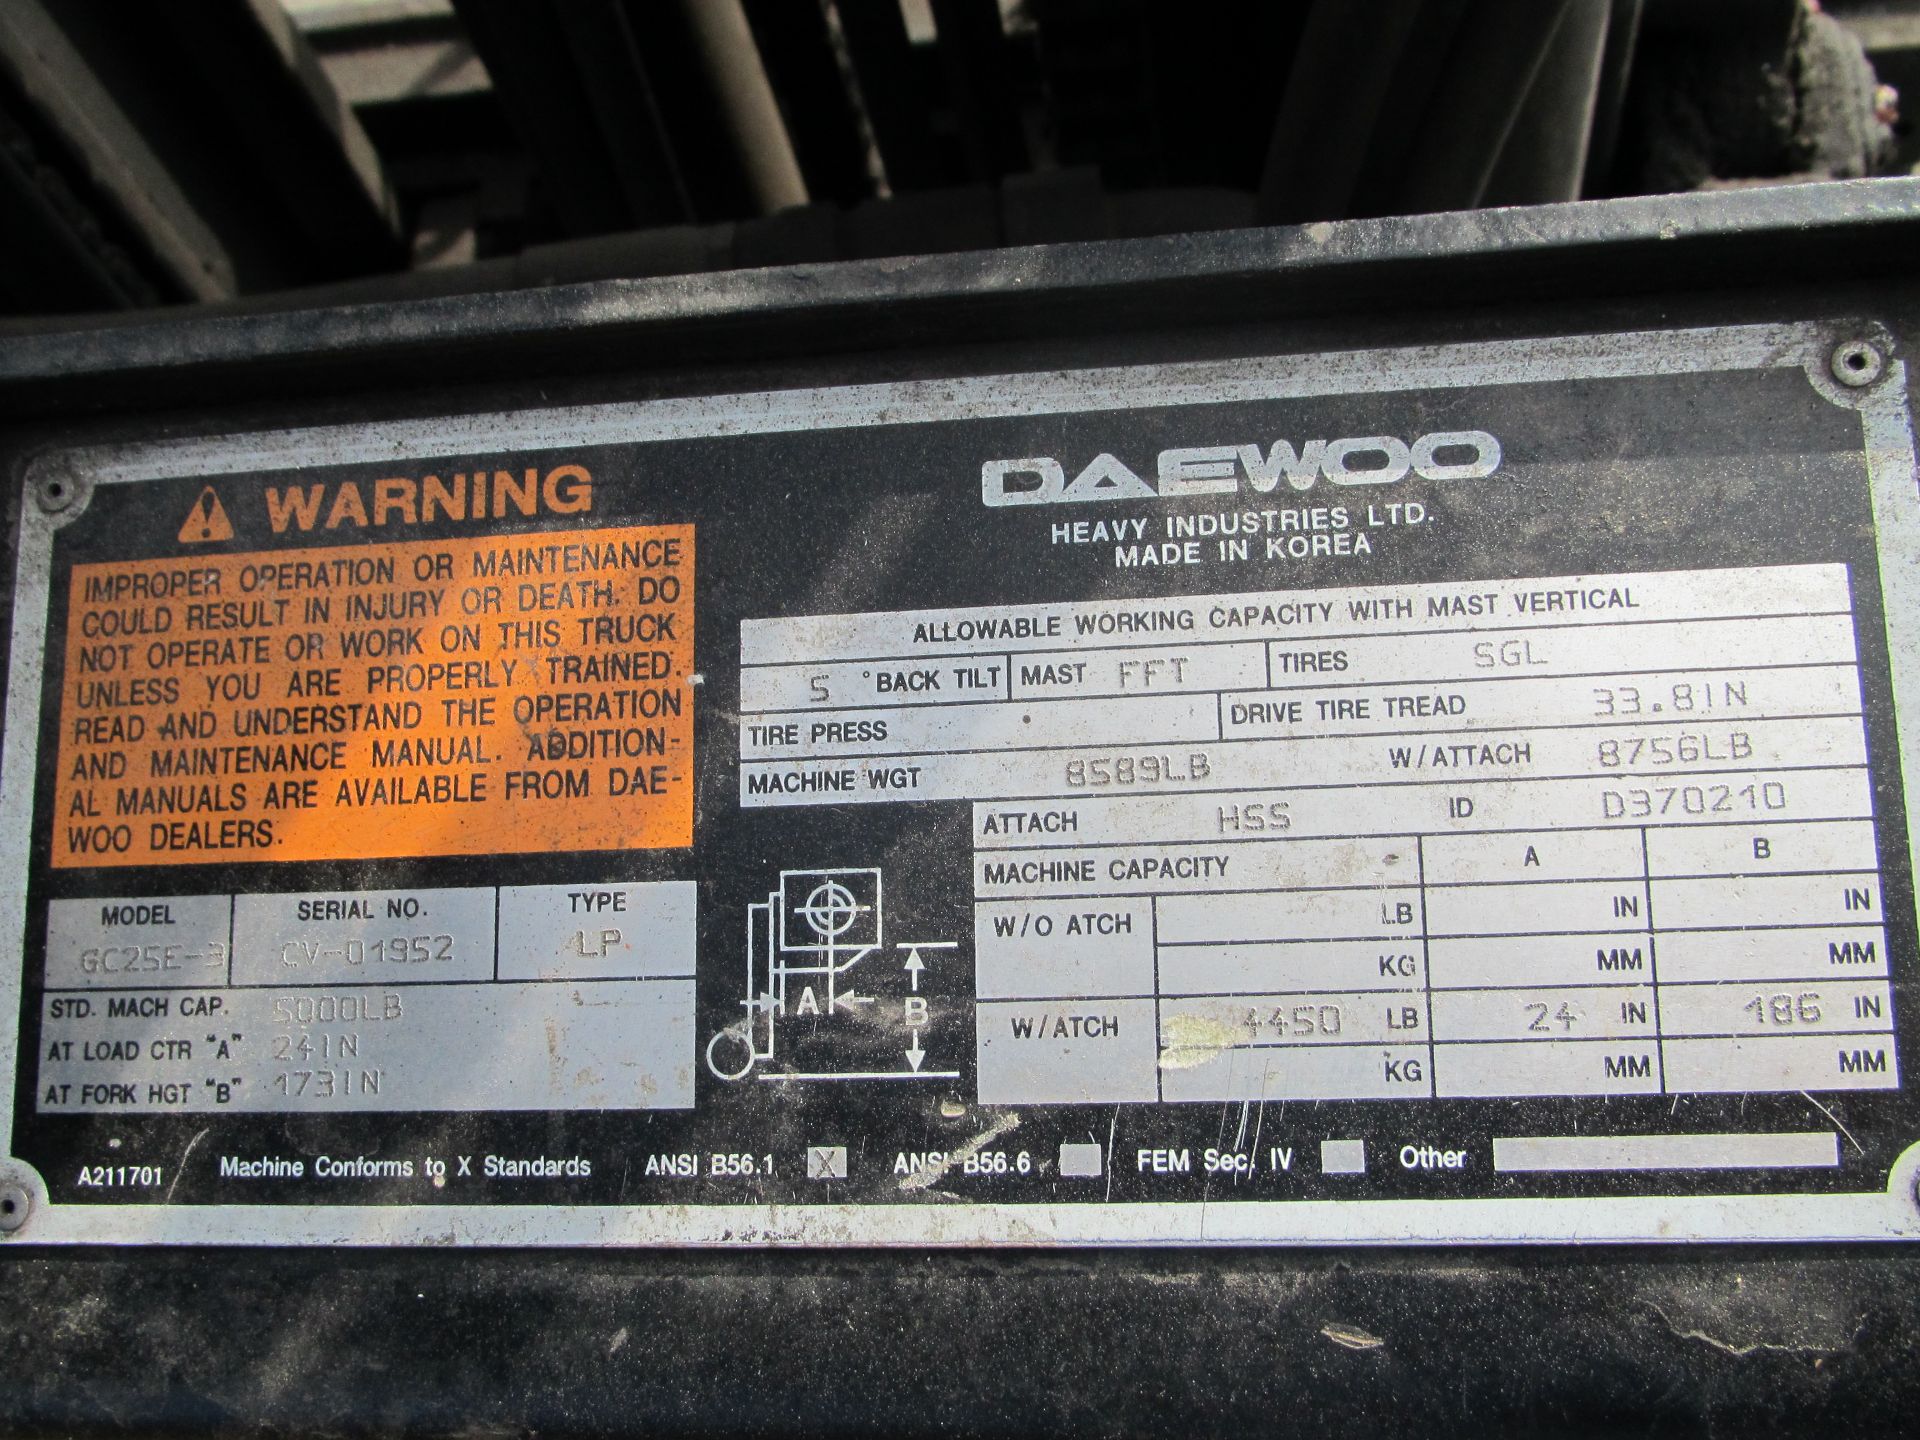 Daewoo GC25E 5,000 lbs Forkift - Image 10 of 10